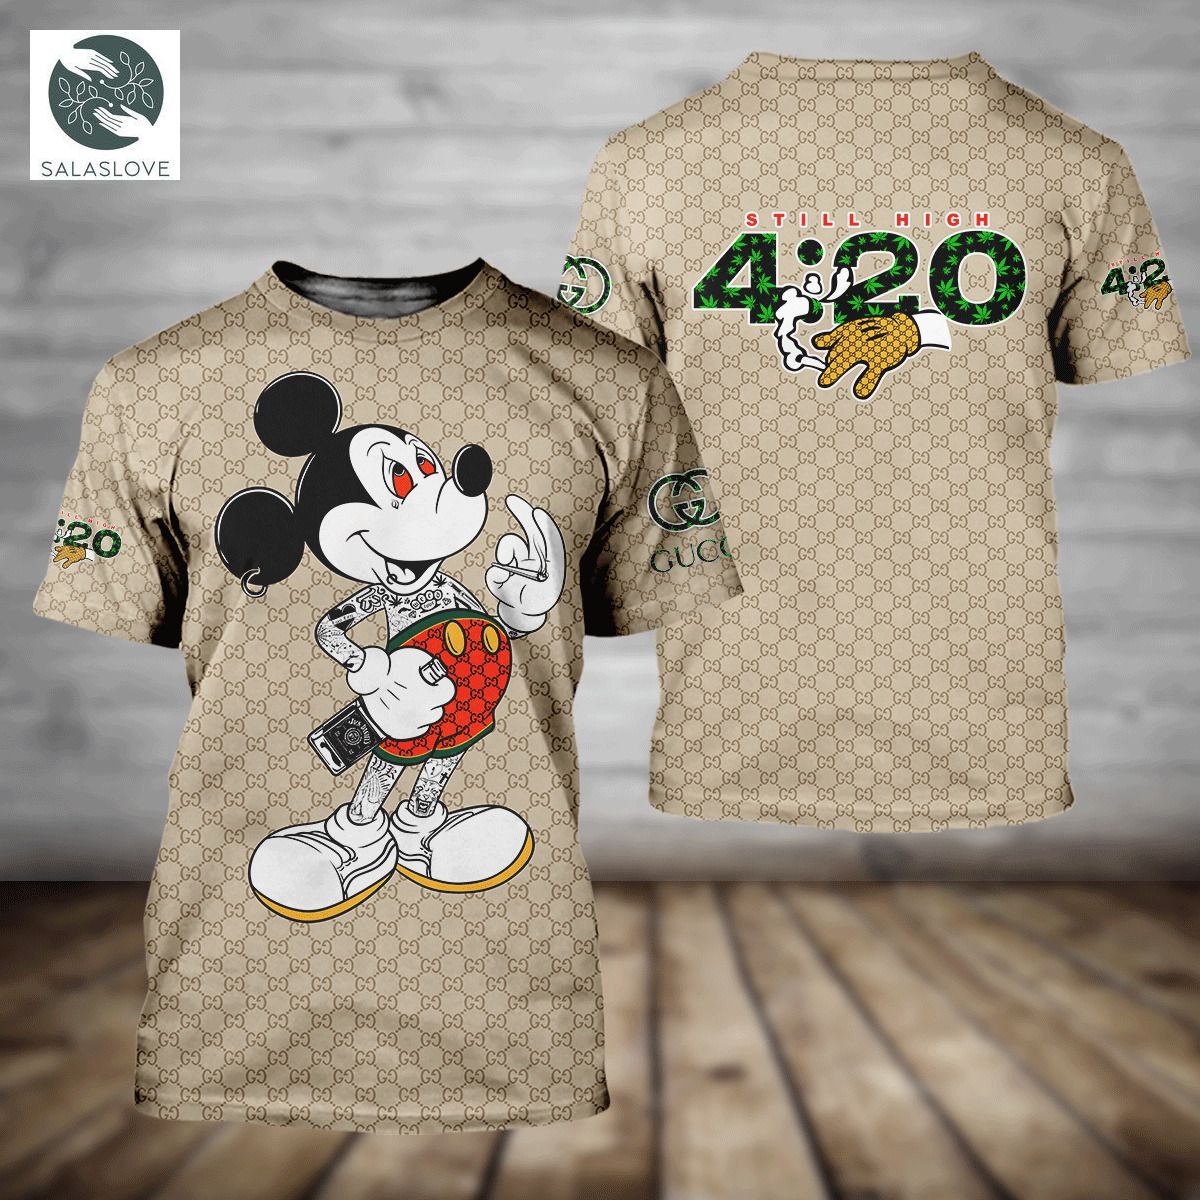 Gucci Mickey Mouse Still High 3D T-shirt